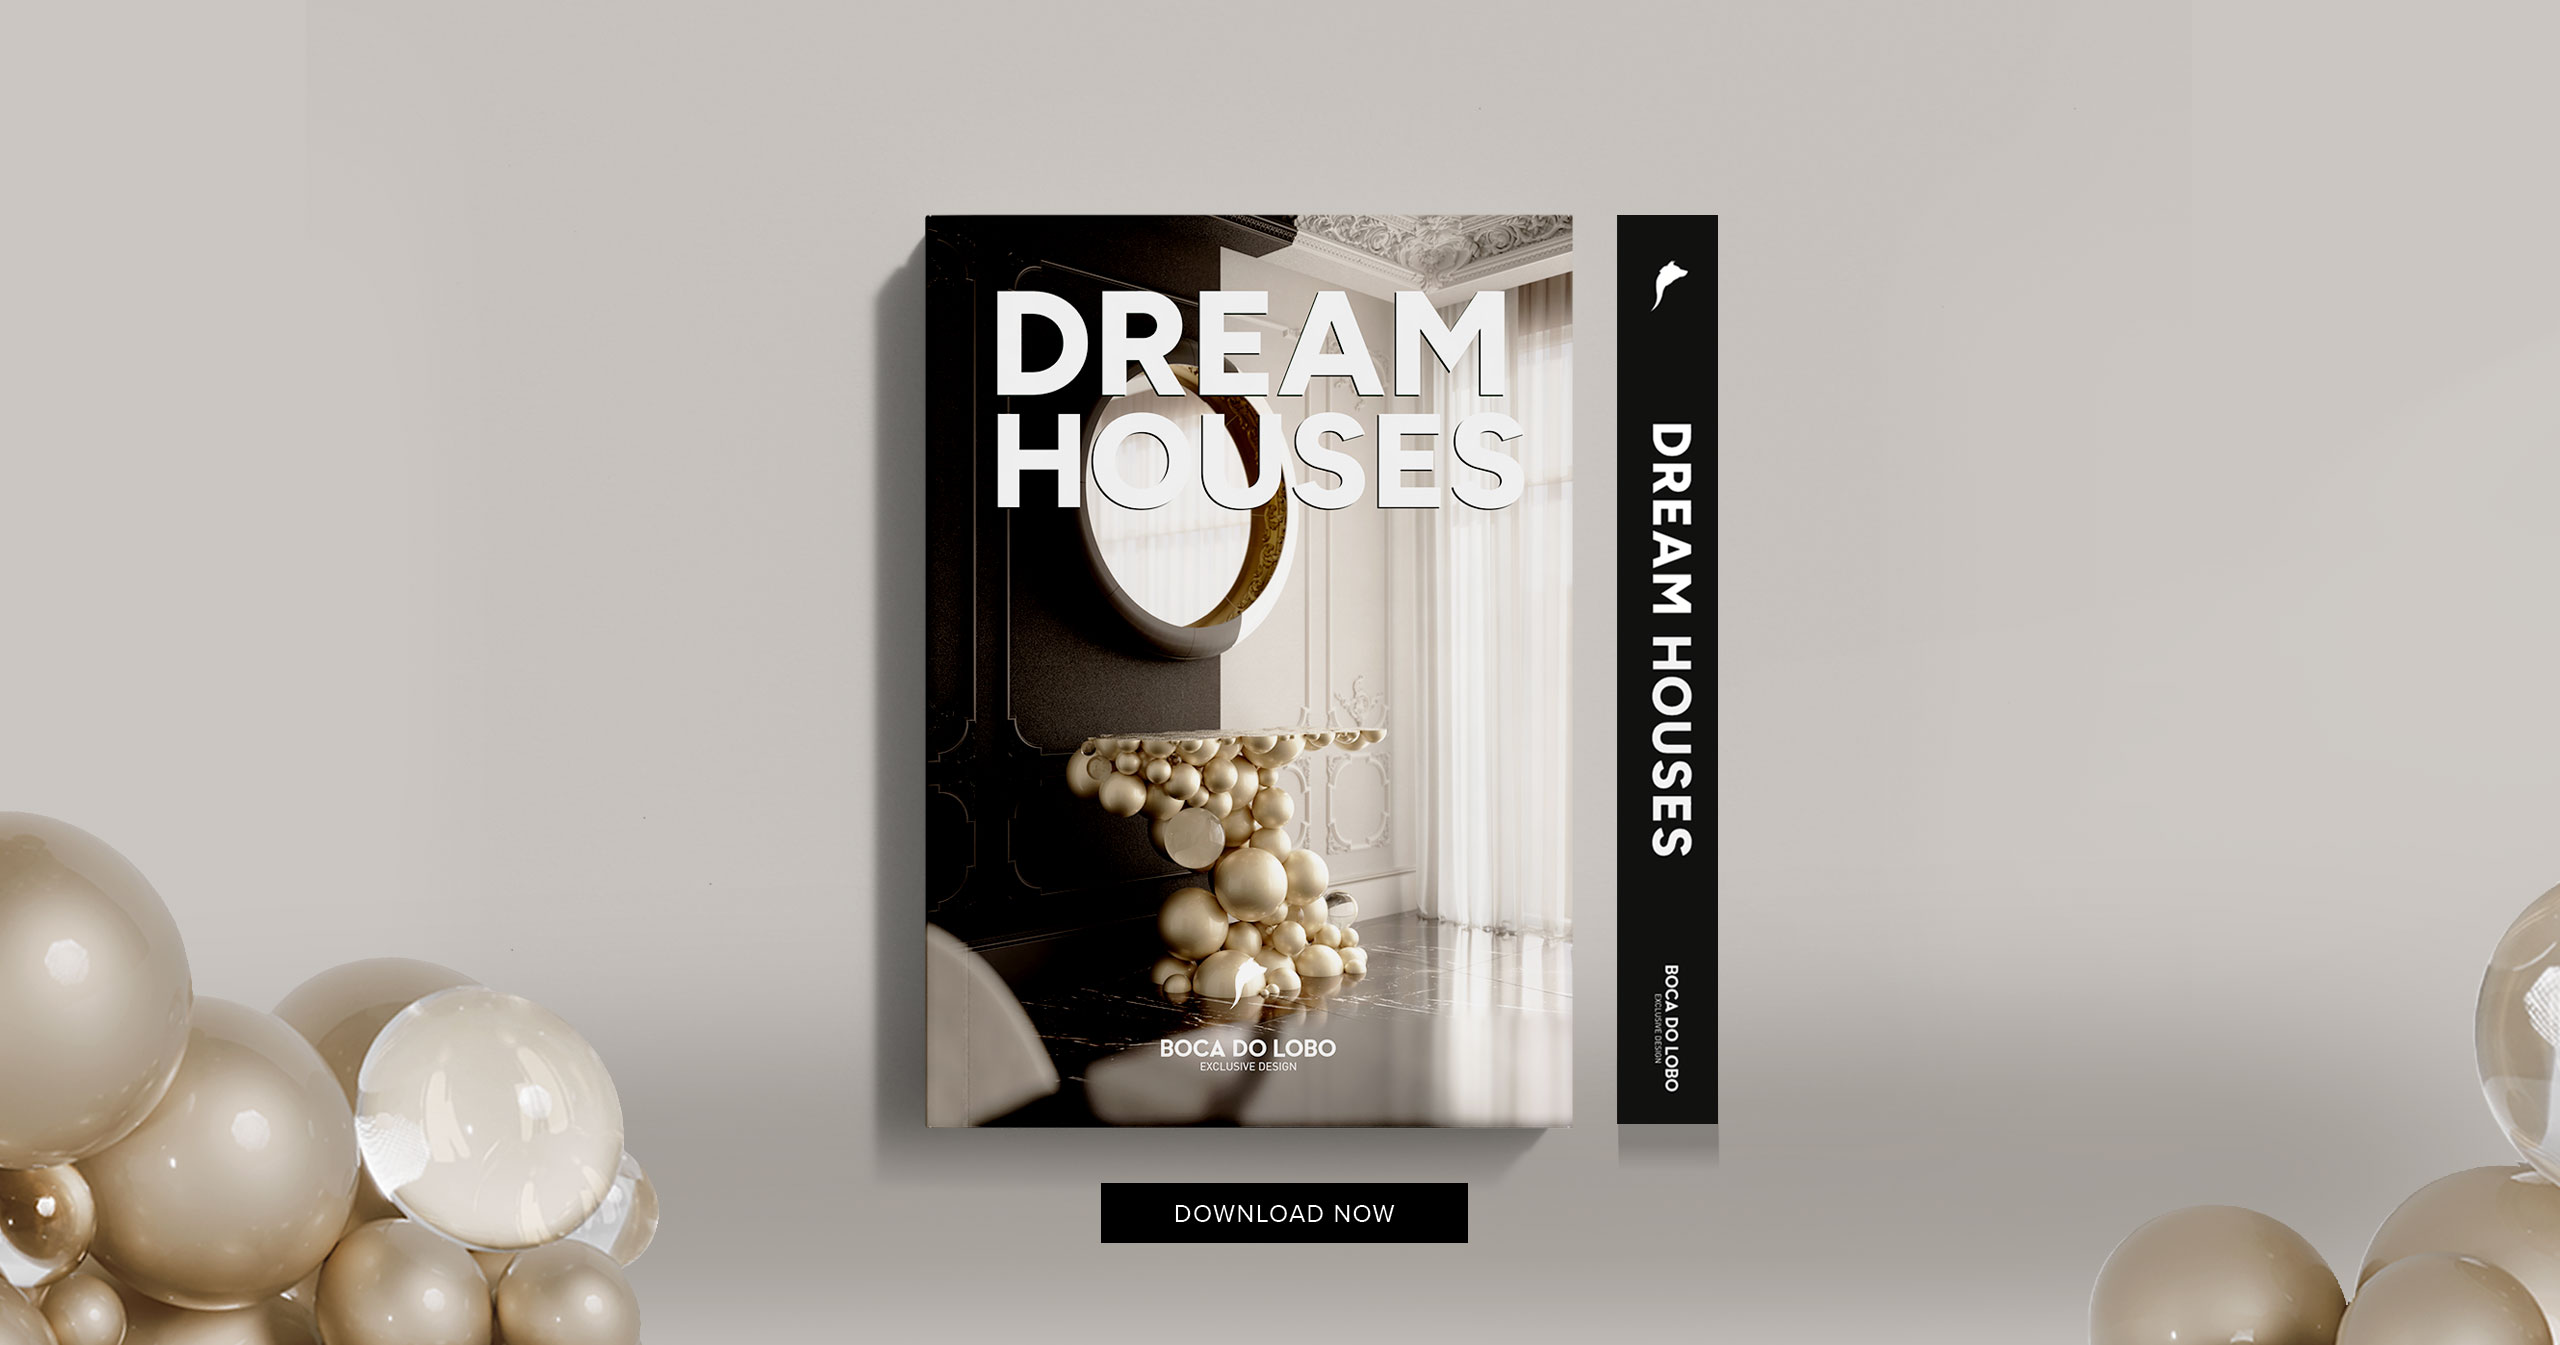 Dream Houses by Boca do Lobo